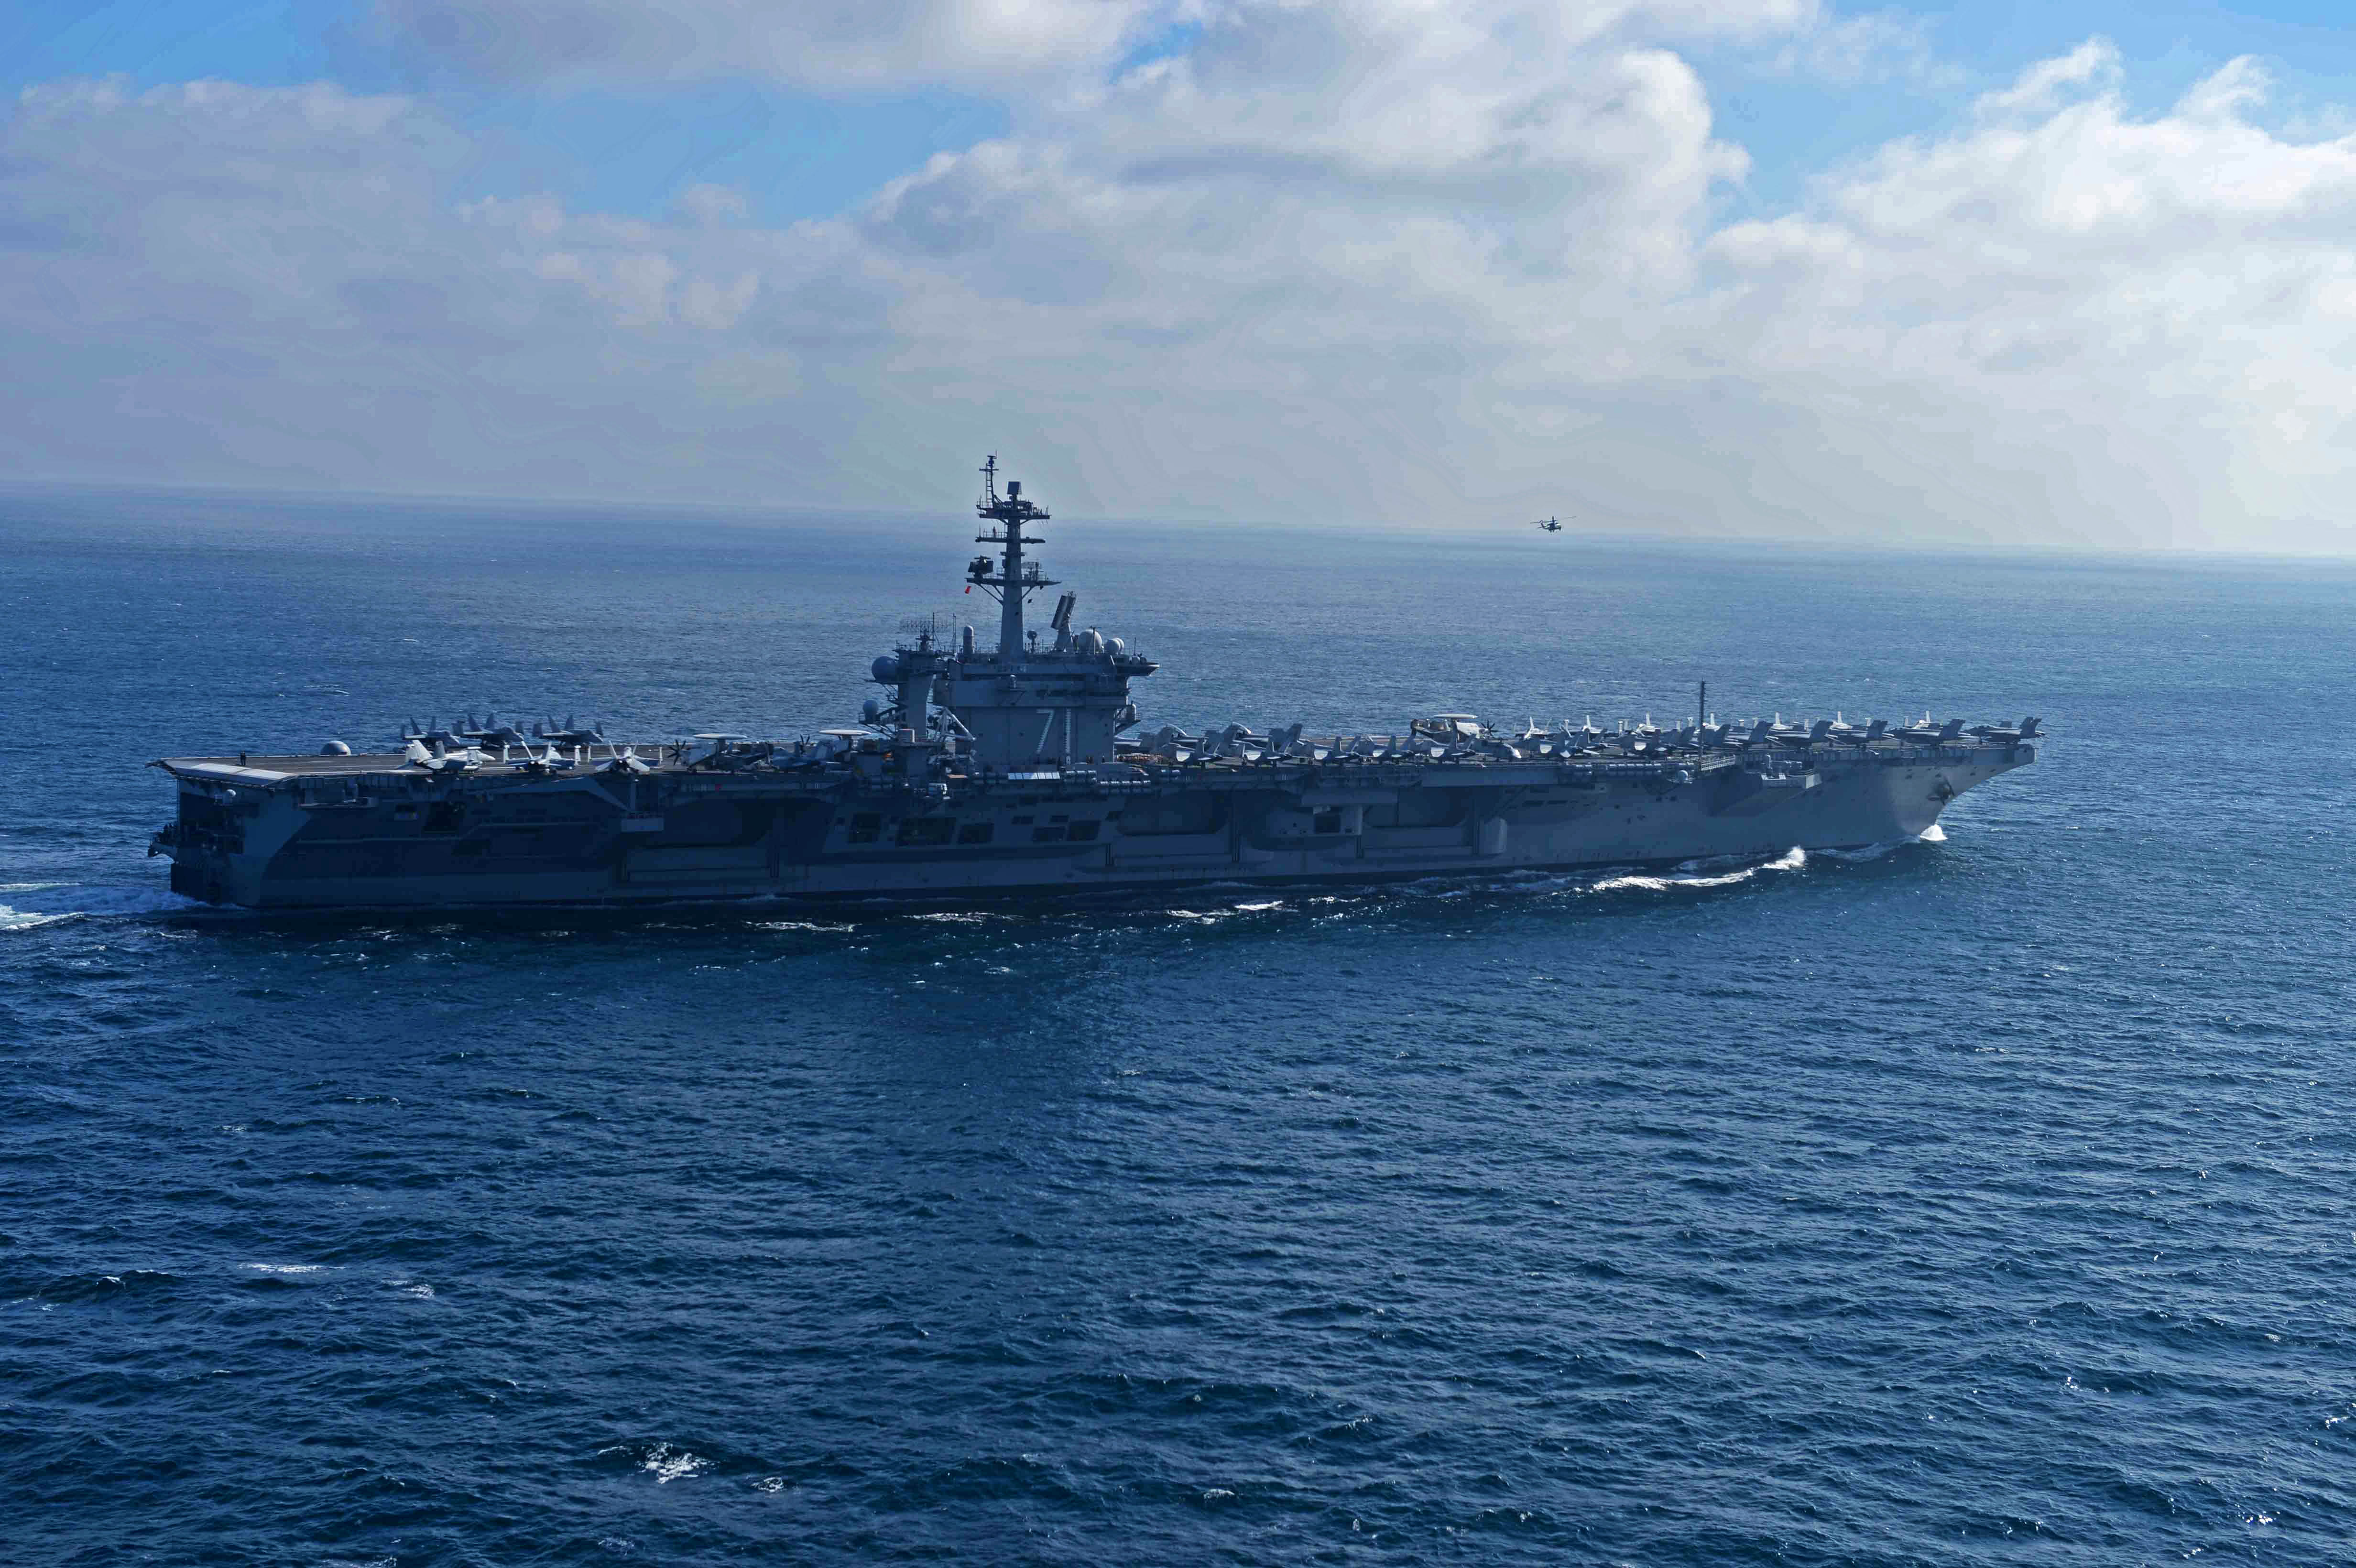 USS THEODORE ROOSEVELT CVN-71 am 16.01.2015 im Atlantik Bild: U.S. Navy